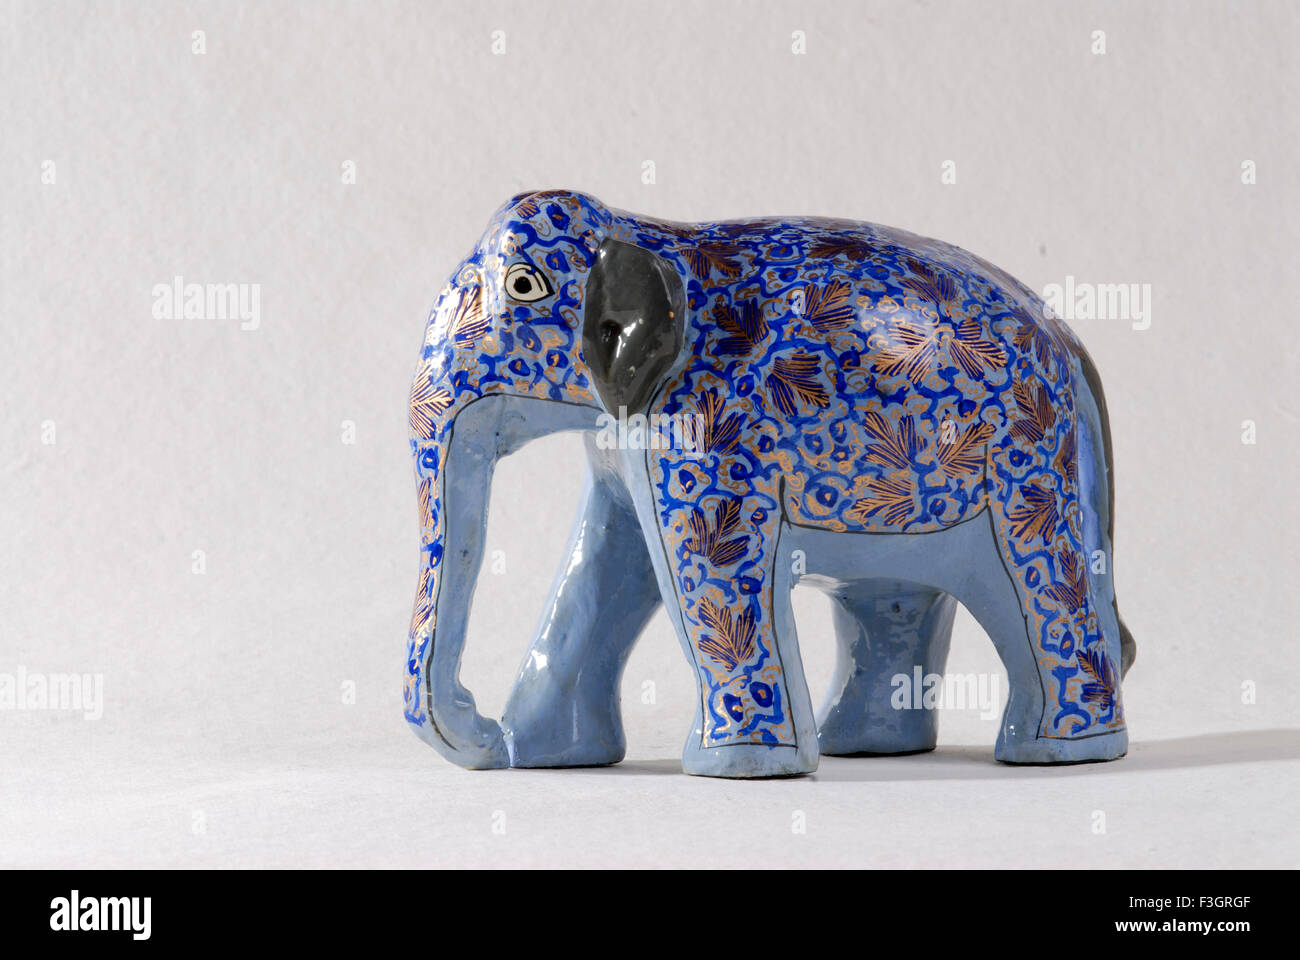 Elefante en pulpa de papel artesanal de Jammu y Cachemira Foto de stock